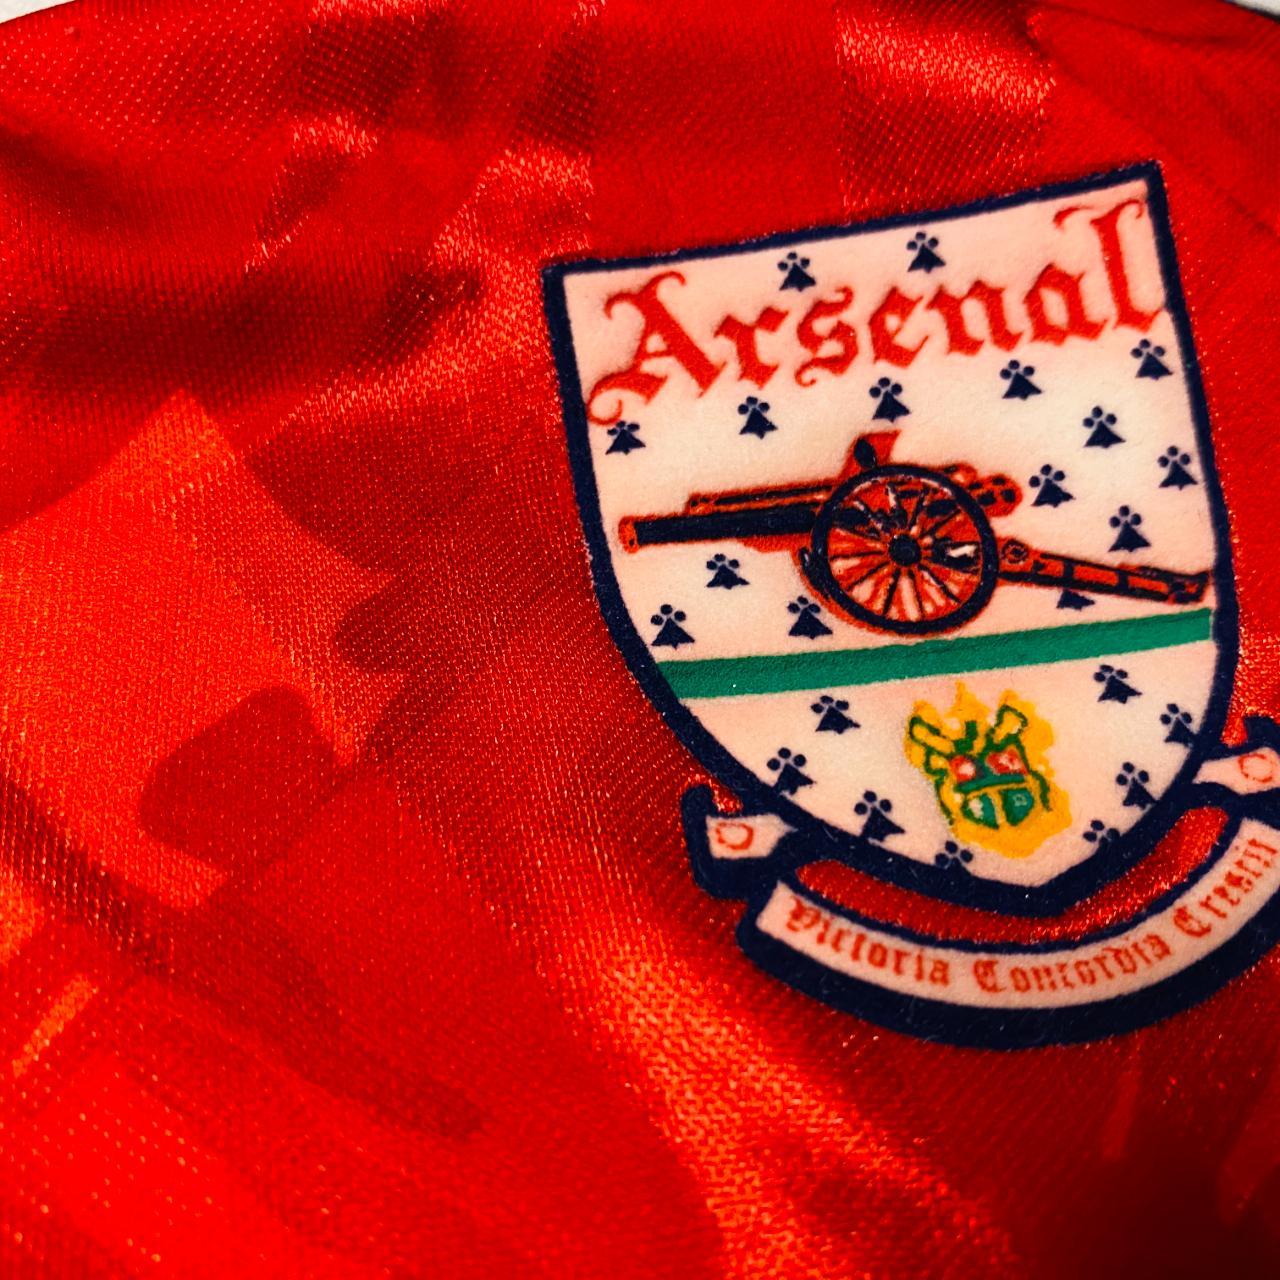 Arsenal 92-94 by Adidas!😍 - Classic Shirts F.C.